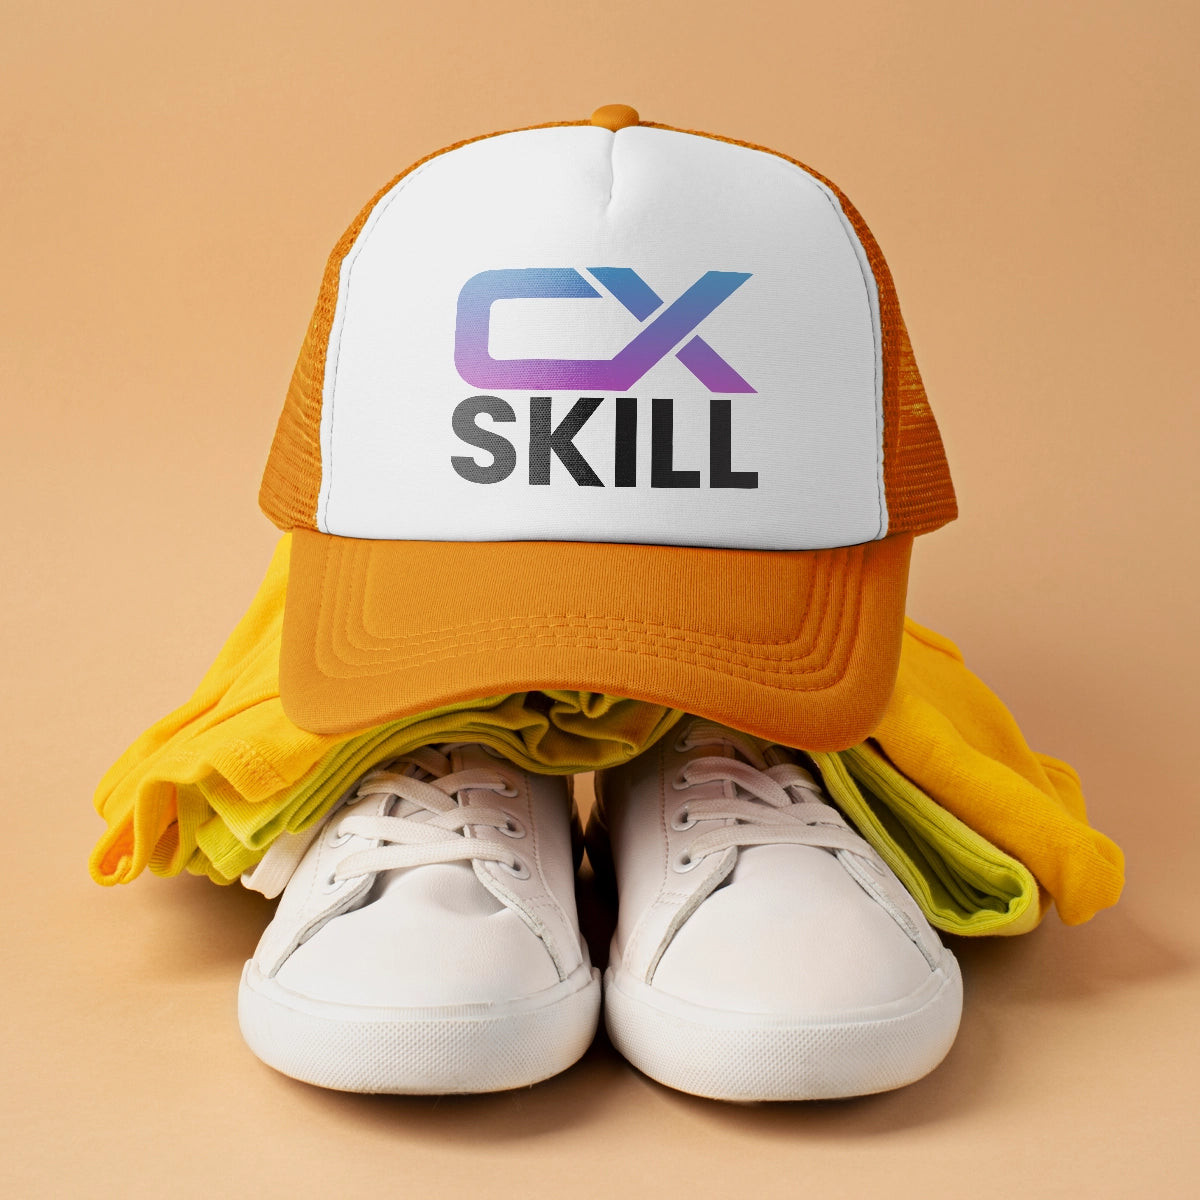 CXSkill.com